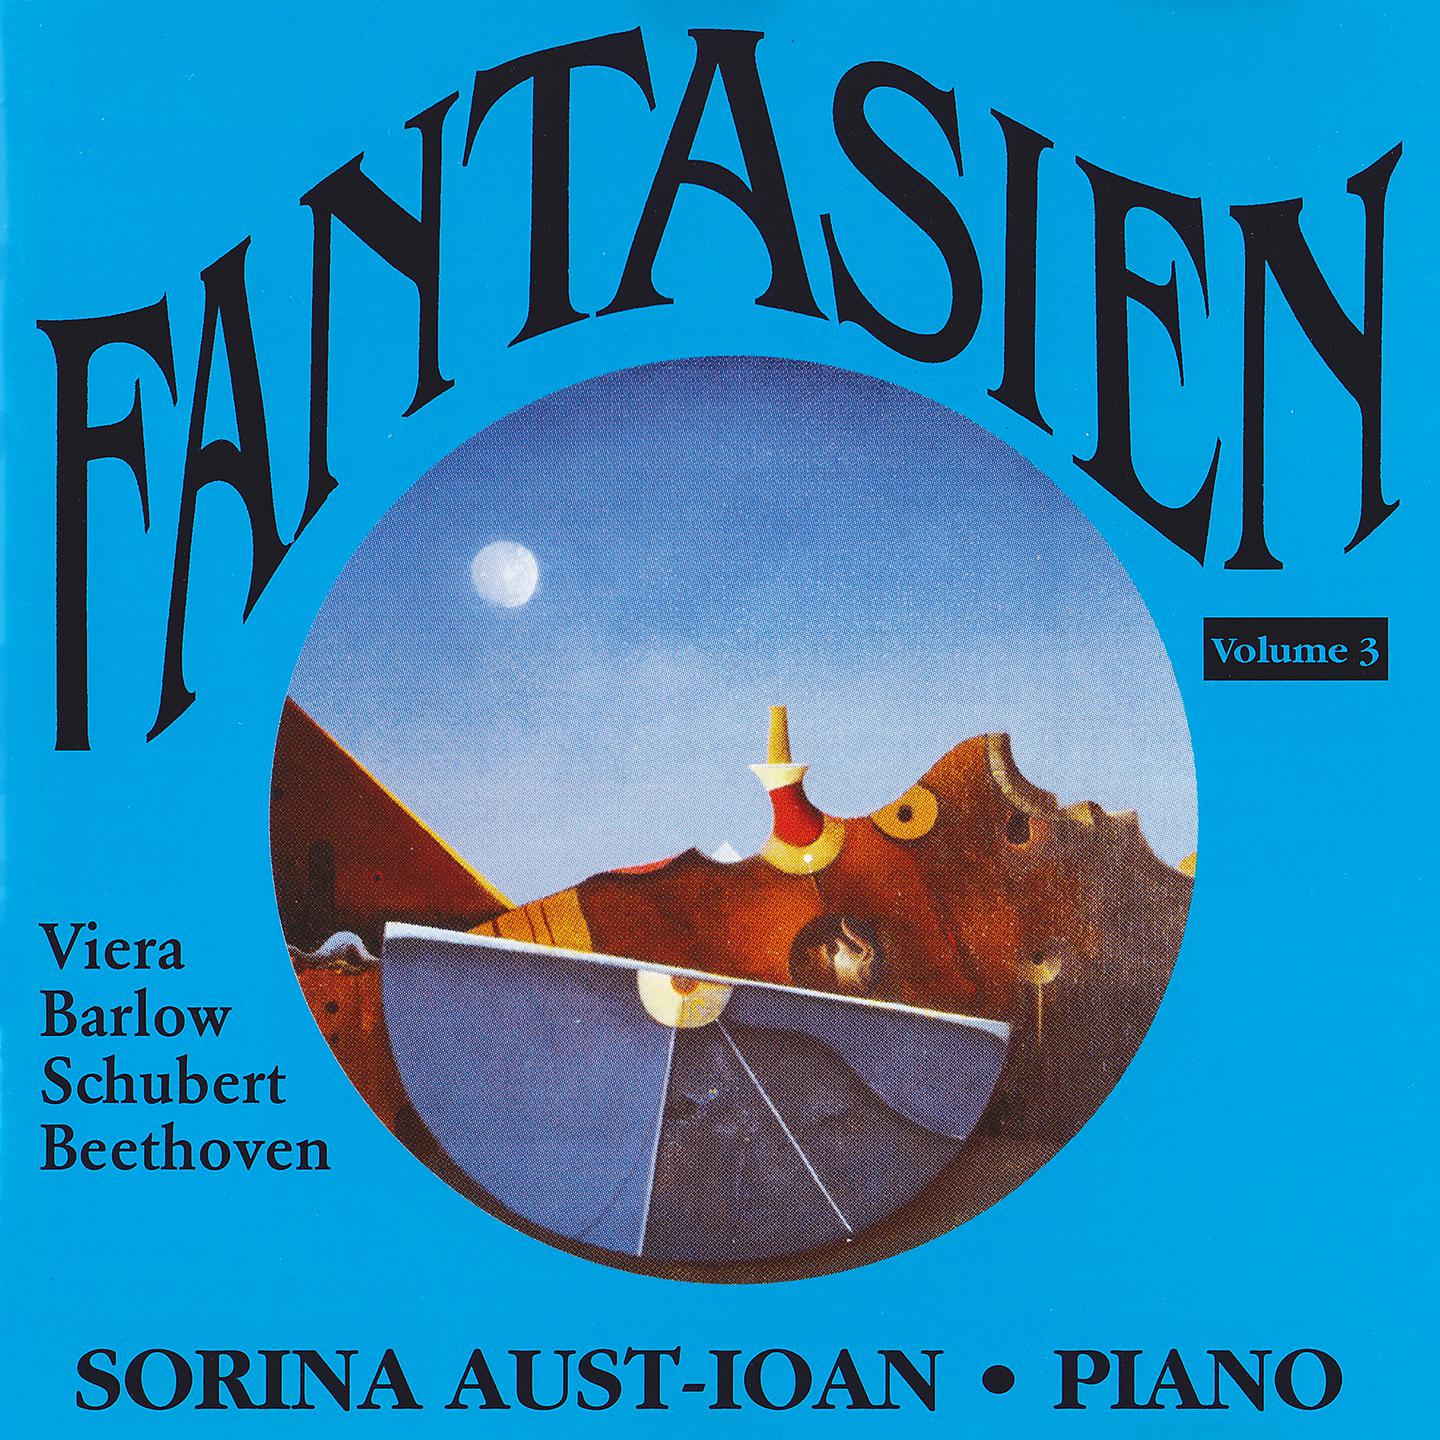 Piano Sonata No. 13 in E-Flat Major, Op. 27 No. 1:I. Andante - Allegro - Andante